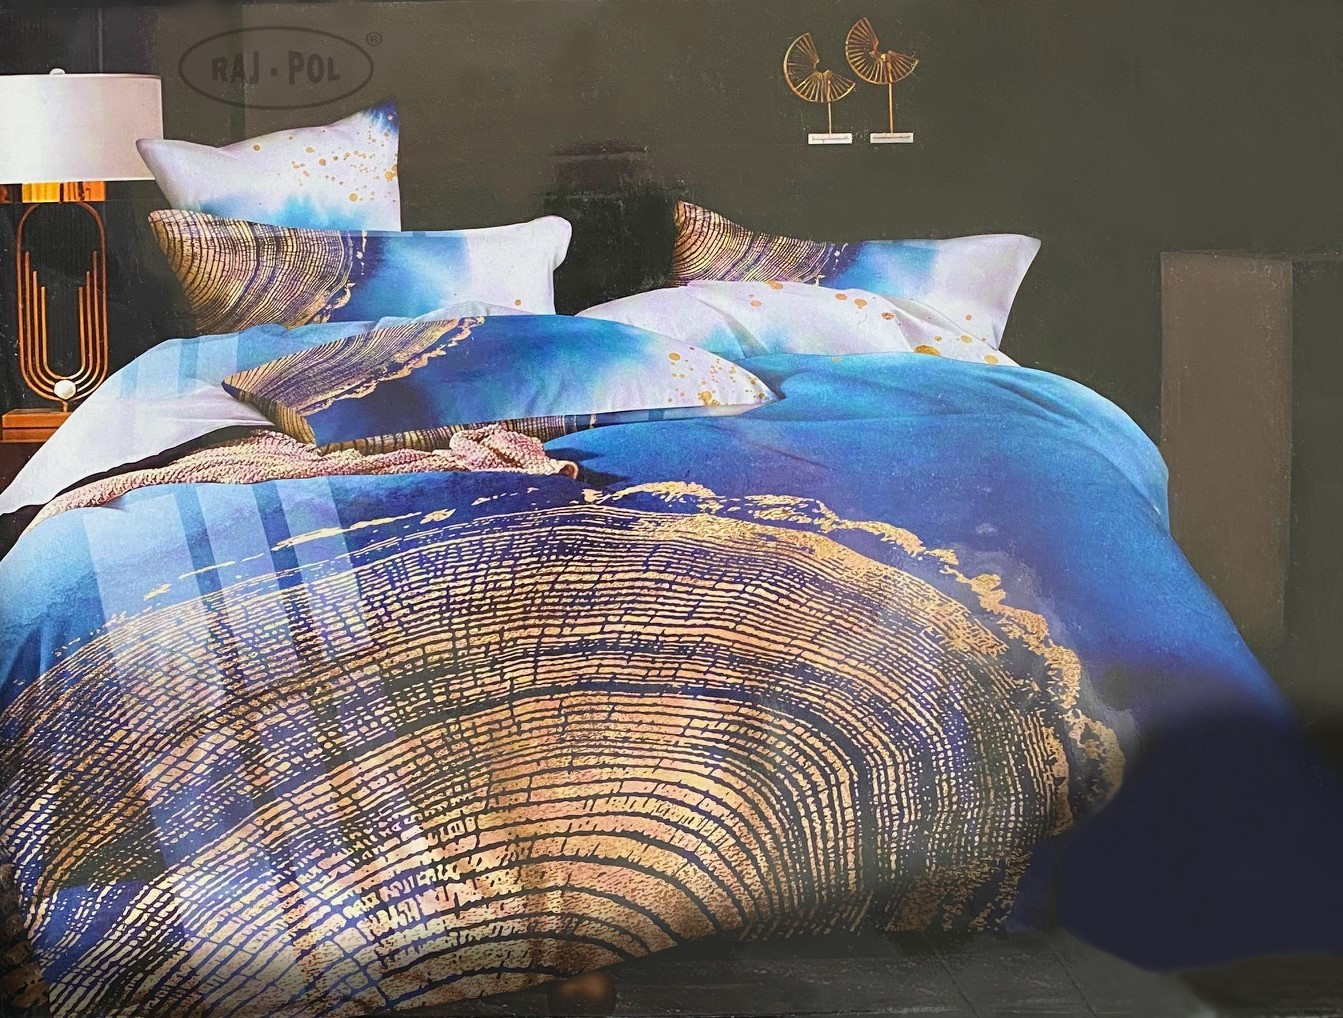 Raj-Pol Ložní prádlo Mose 10 Multicolour Š 160 cm D 200 cm, 2 ks. Š 70 cm D 80 cm